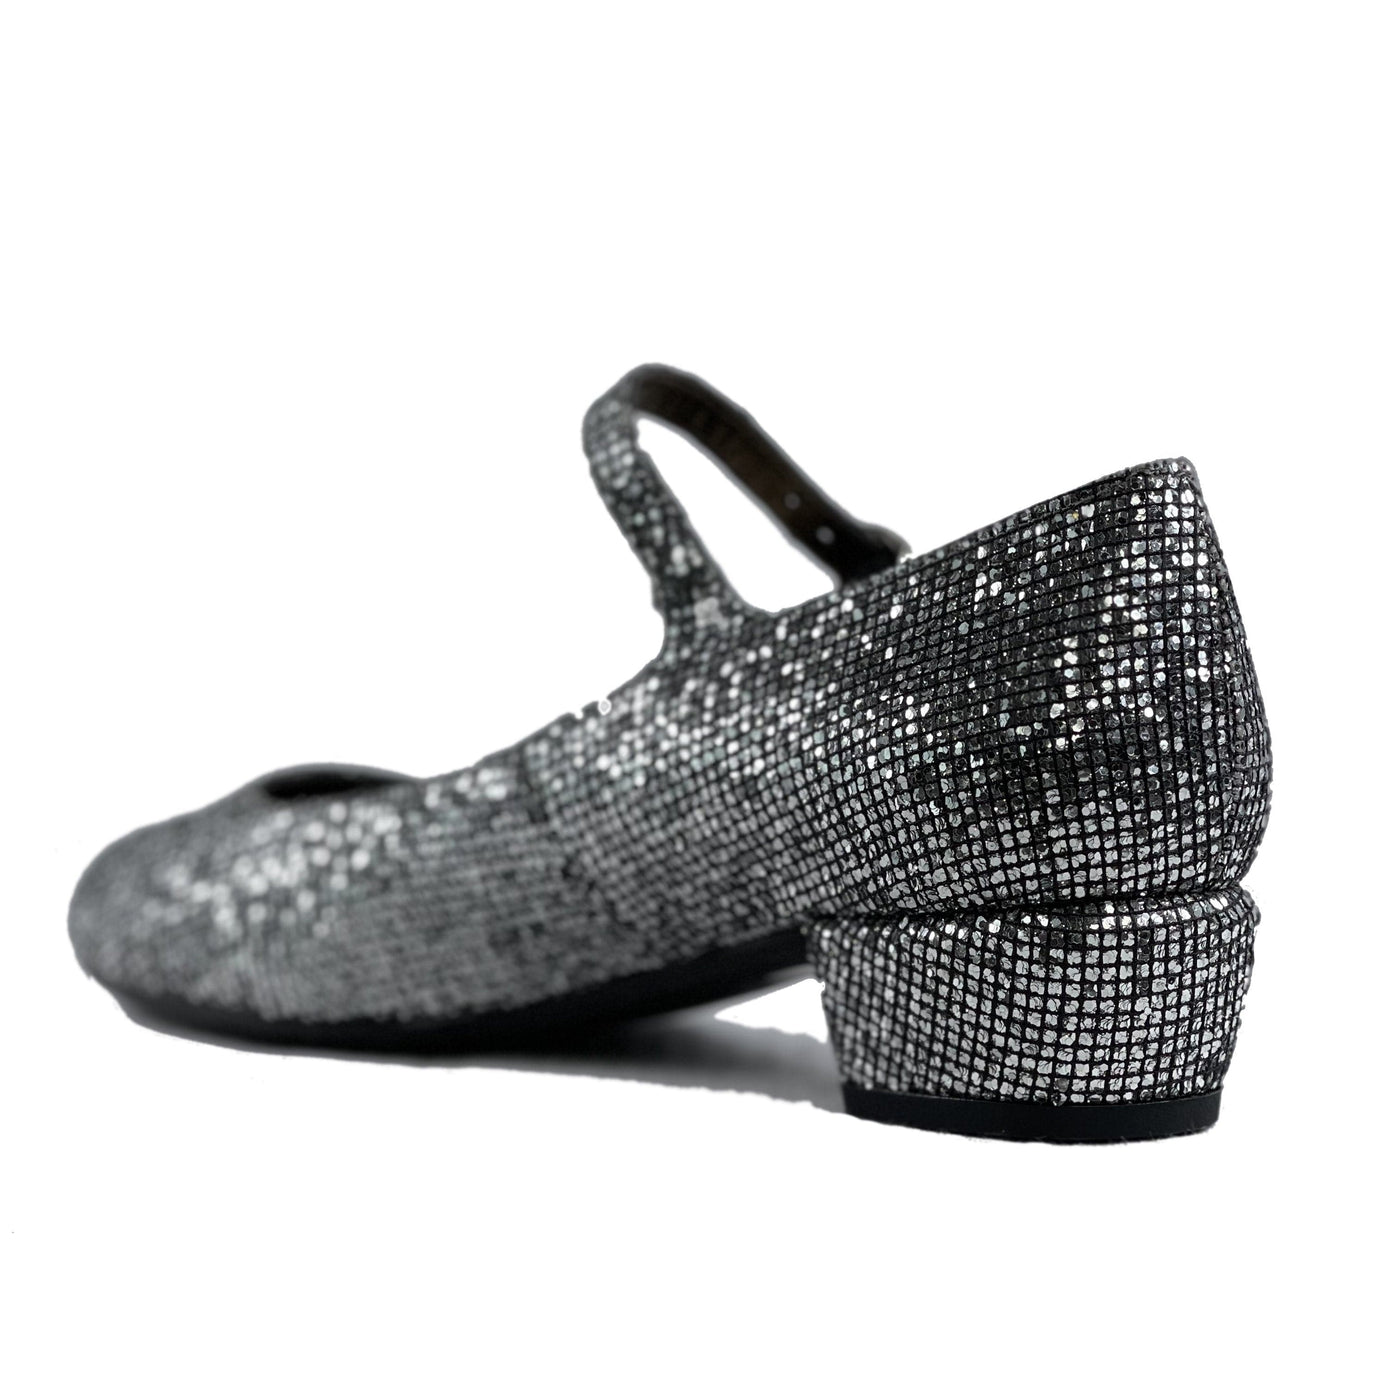 'Gracie' Mary-Jane silver glitter Low-Heels  by Zette Shoes